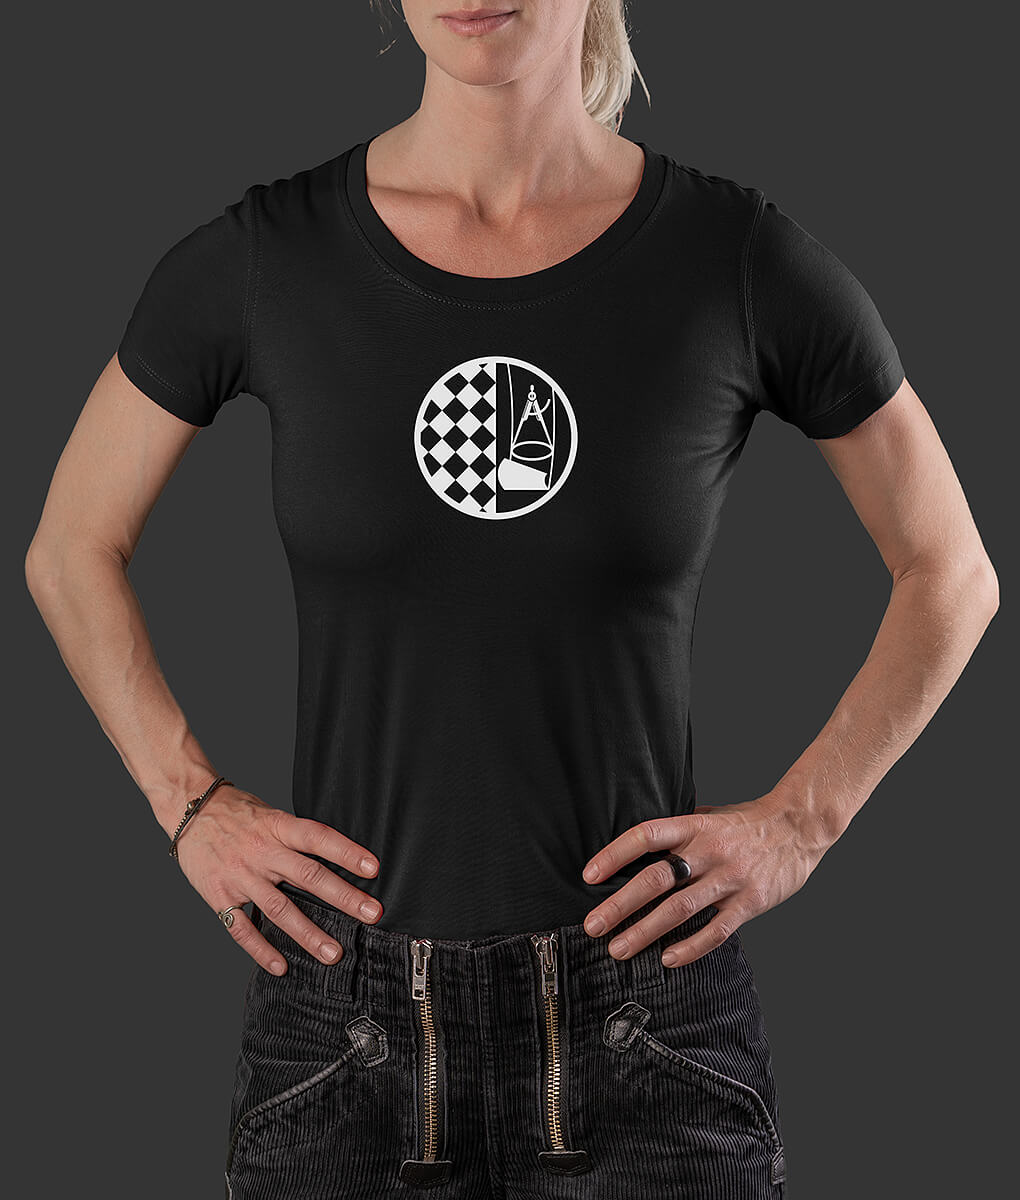 T-Shirt Louisa klassisch Bodenleger Brust schwarz L